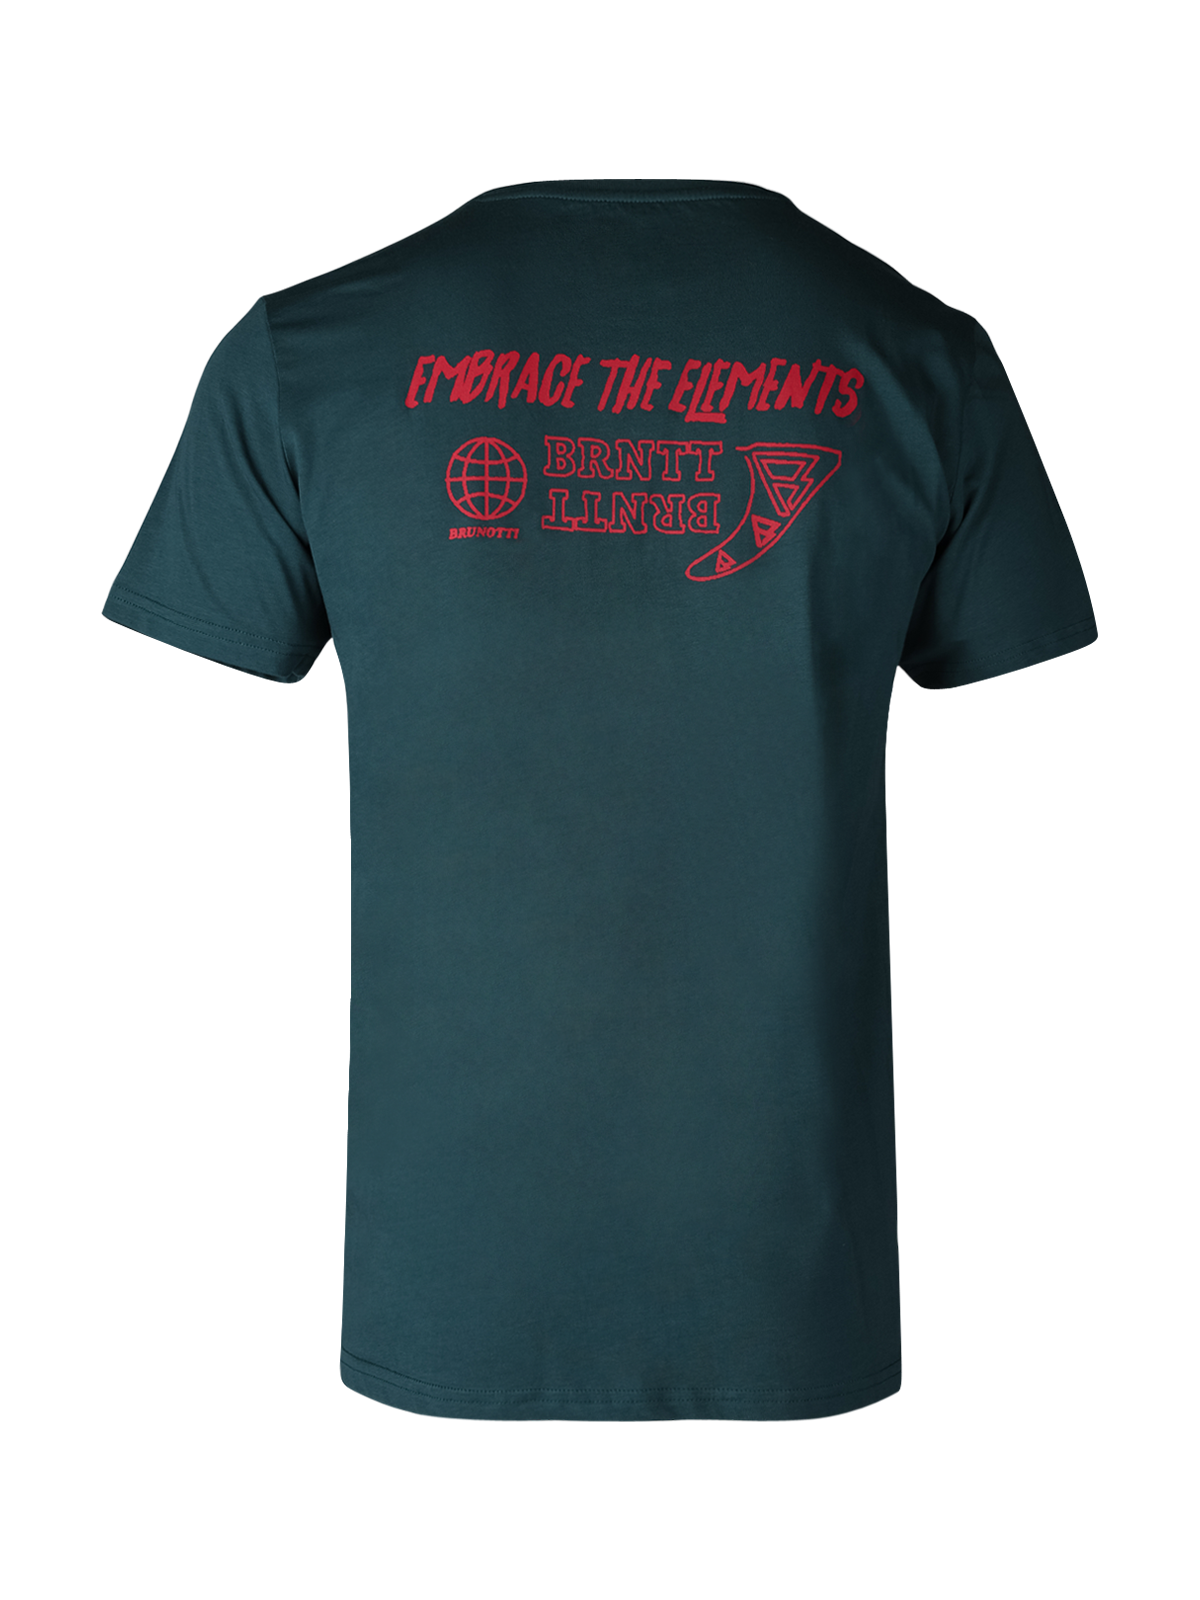 Milon-Back-R Heren T-shirt | Groen